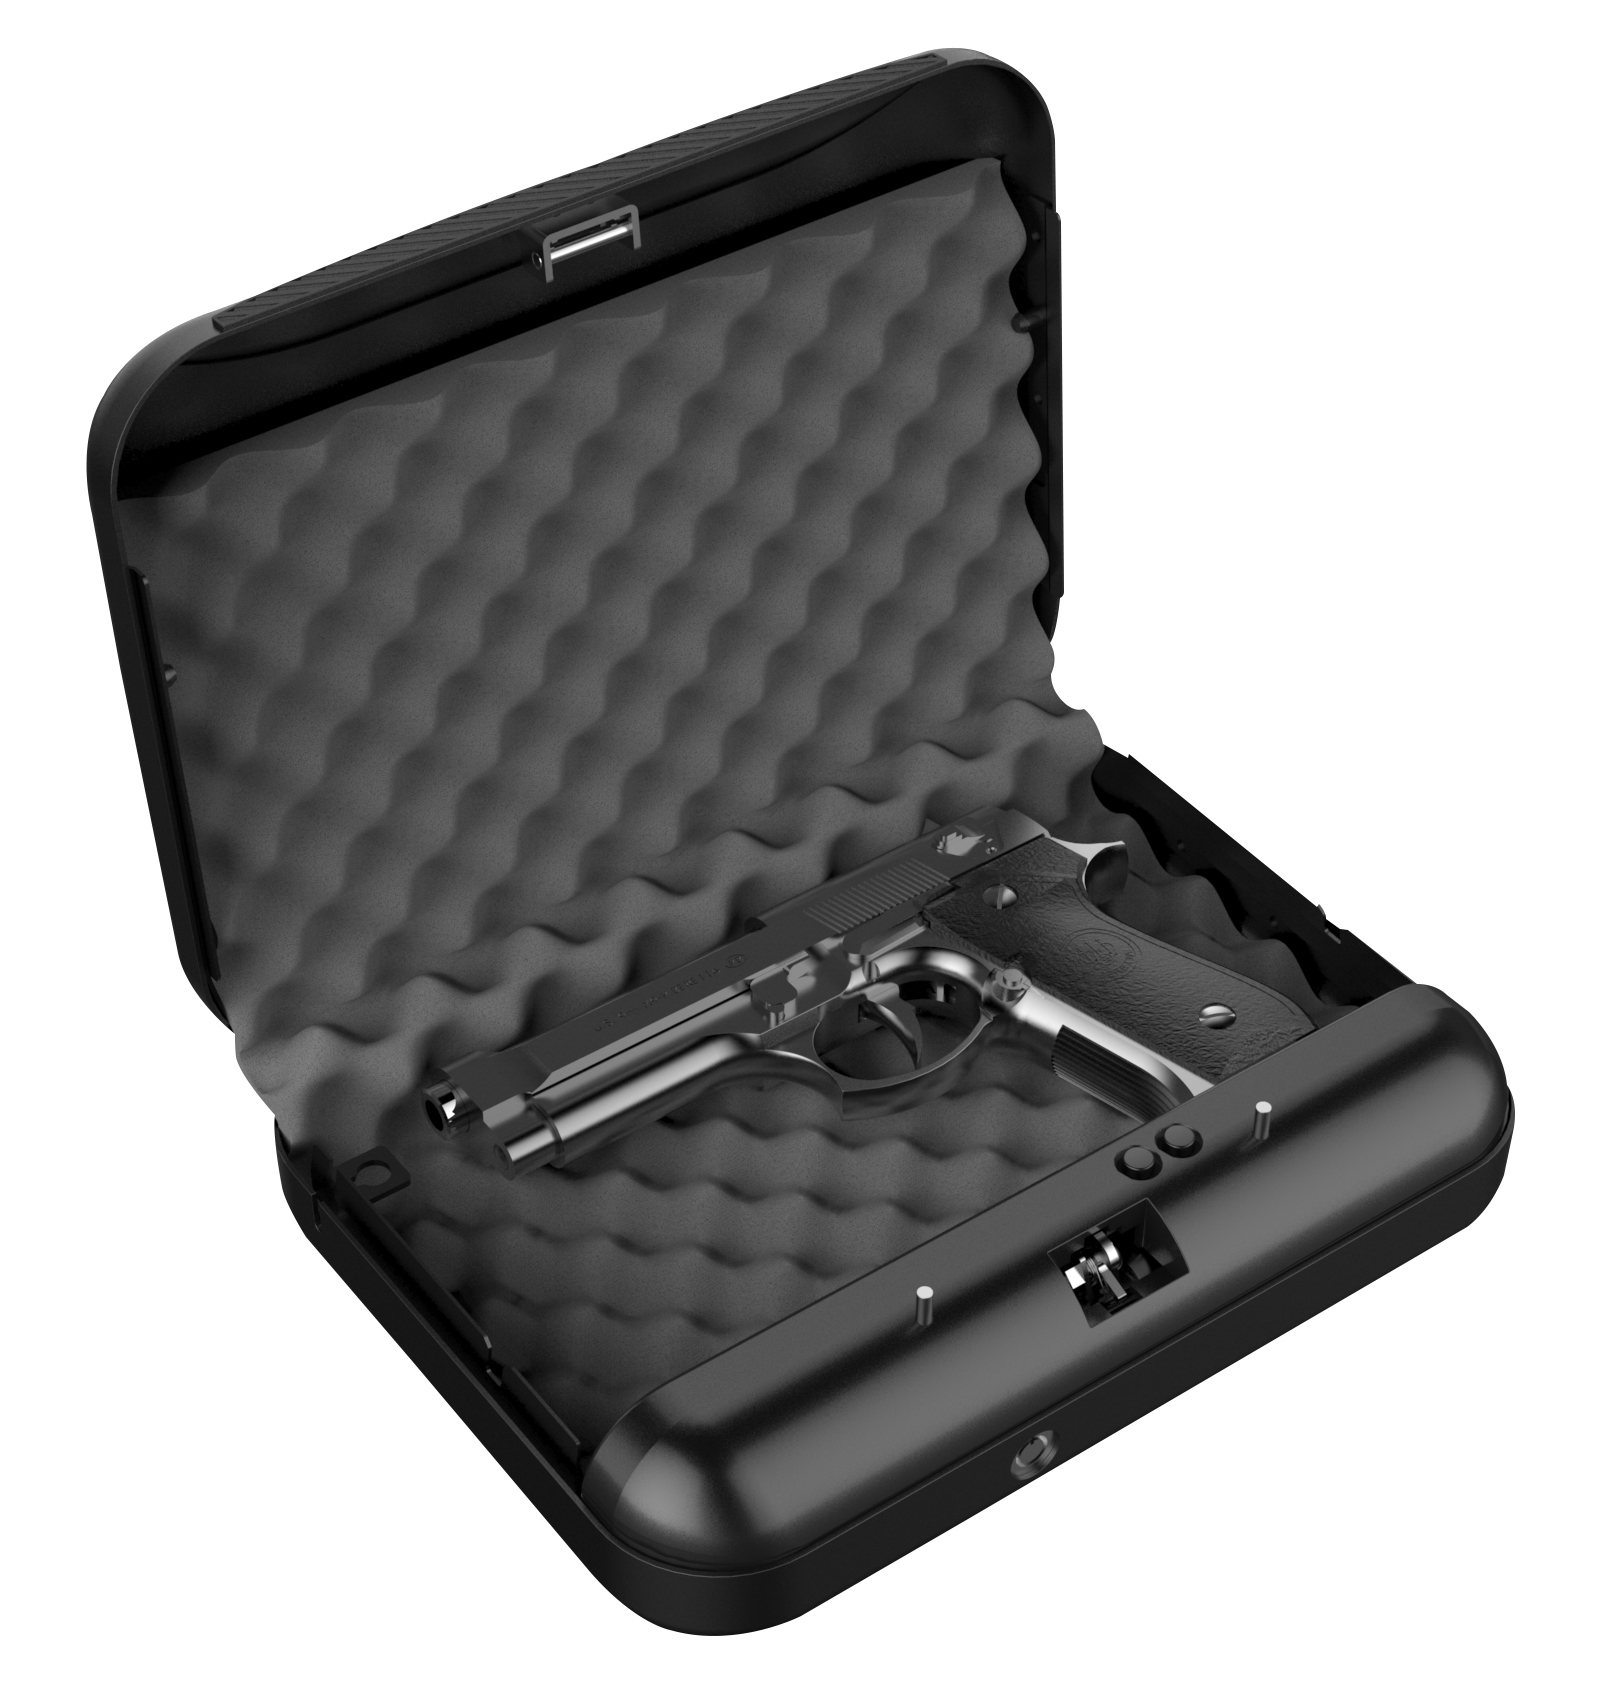 Pistol hand gun Safes Heavy Steel Construction Portable Small Metal Quick Access Portable Gun Safe Box Pistol Safe